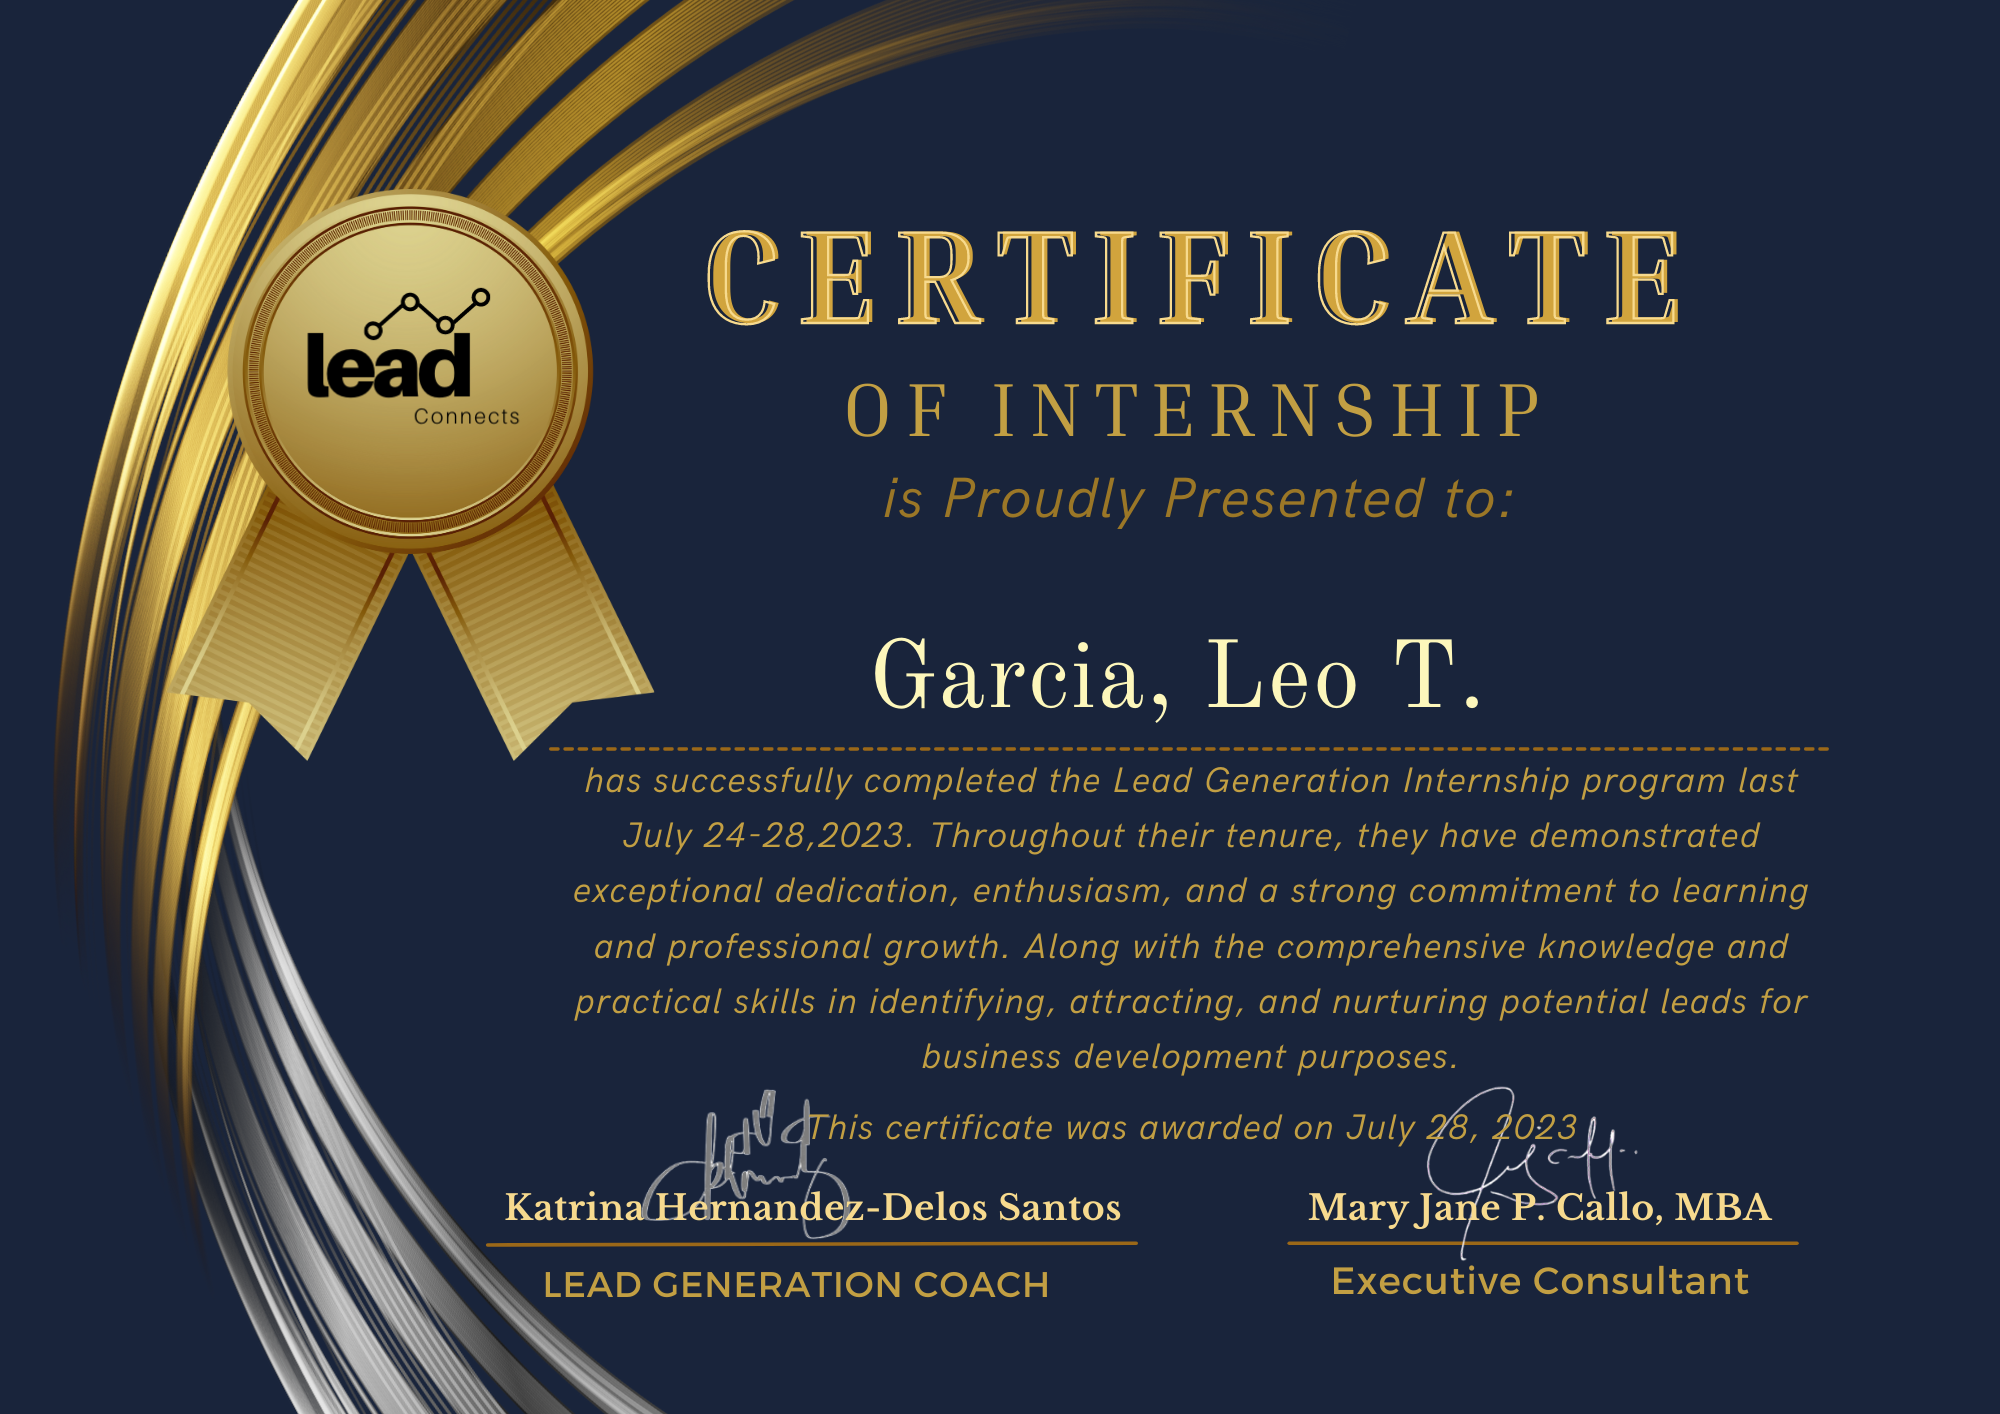 Lead Generation Internship